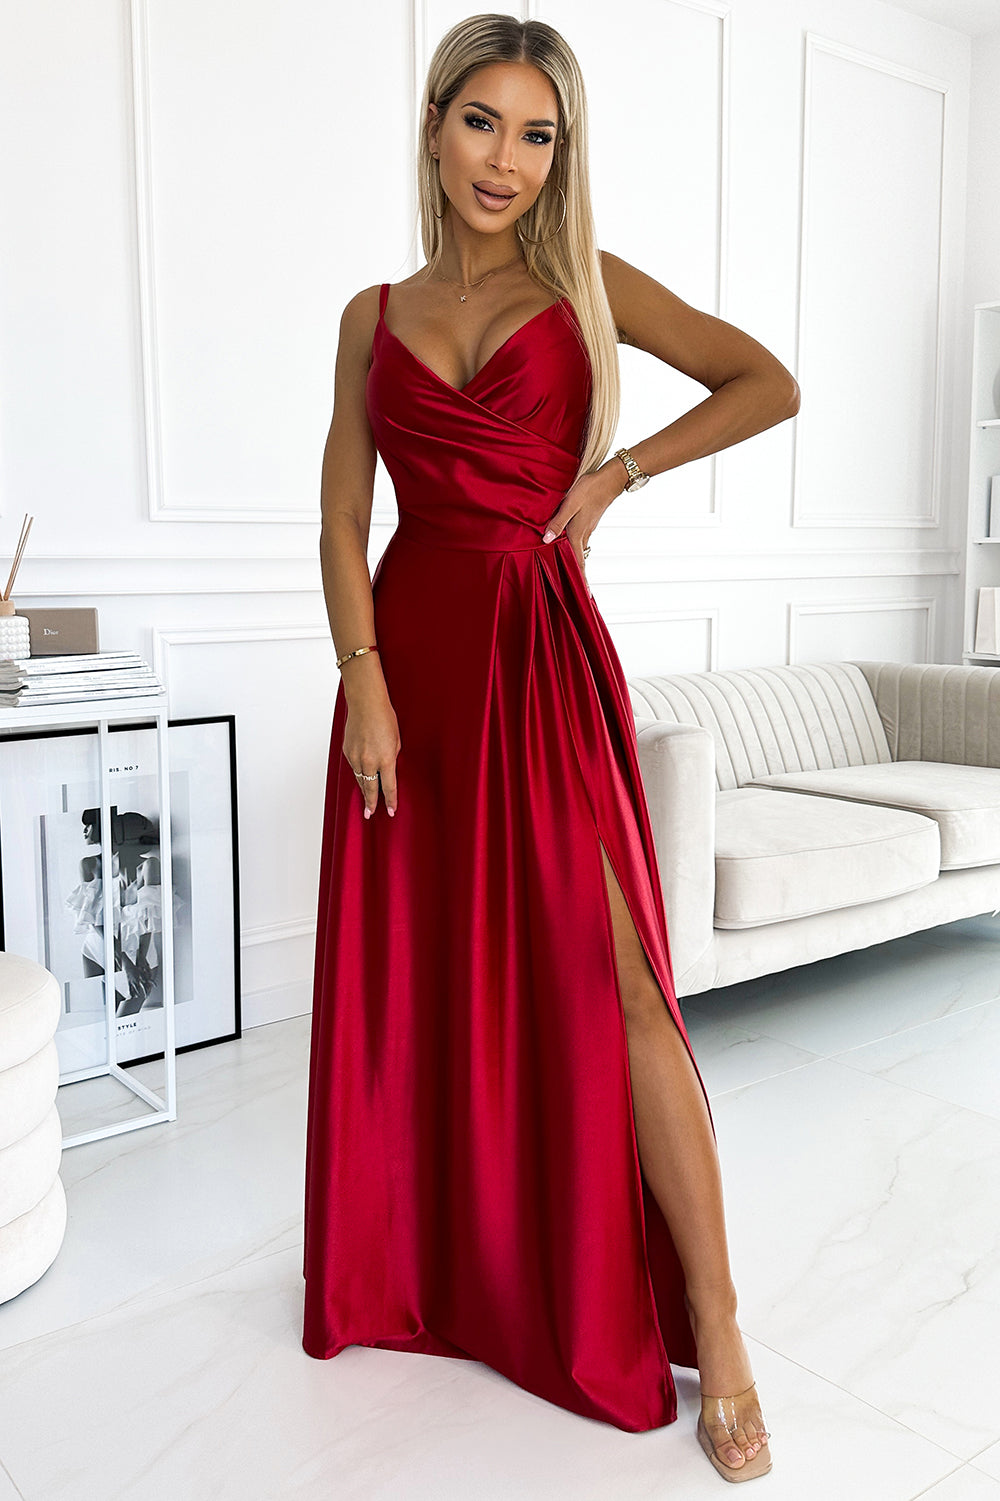 299-14 CHIARA elegant satin maxi dress with straps - red color